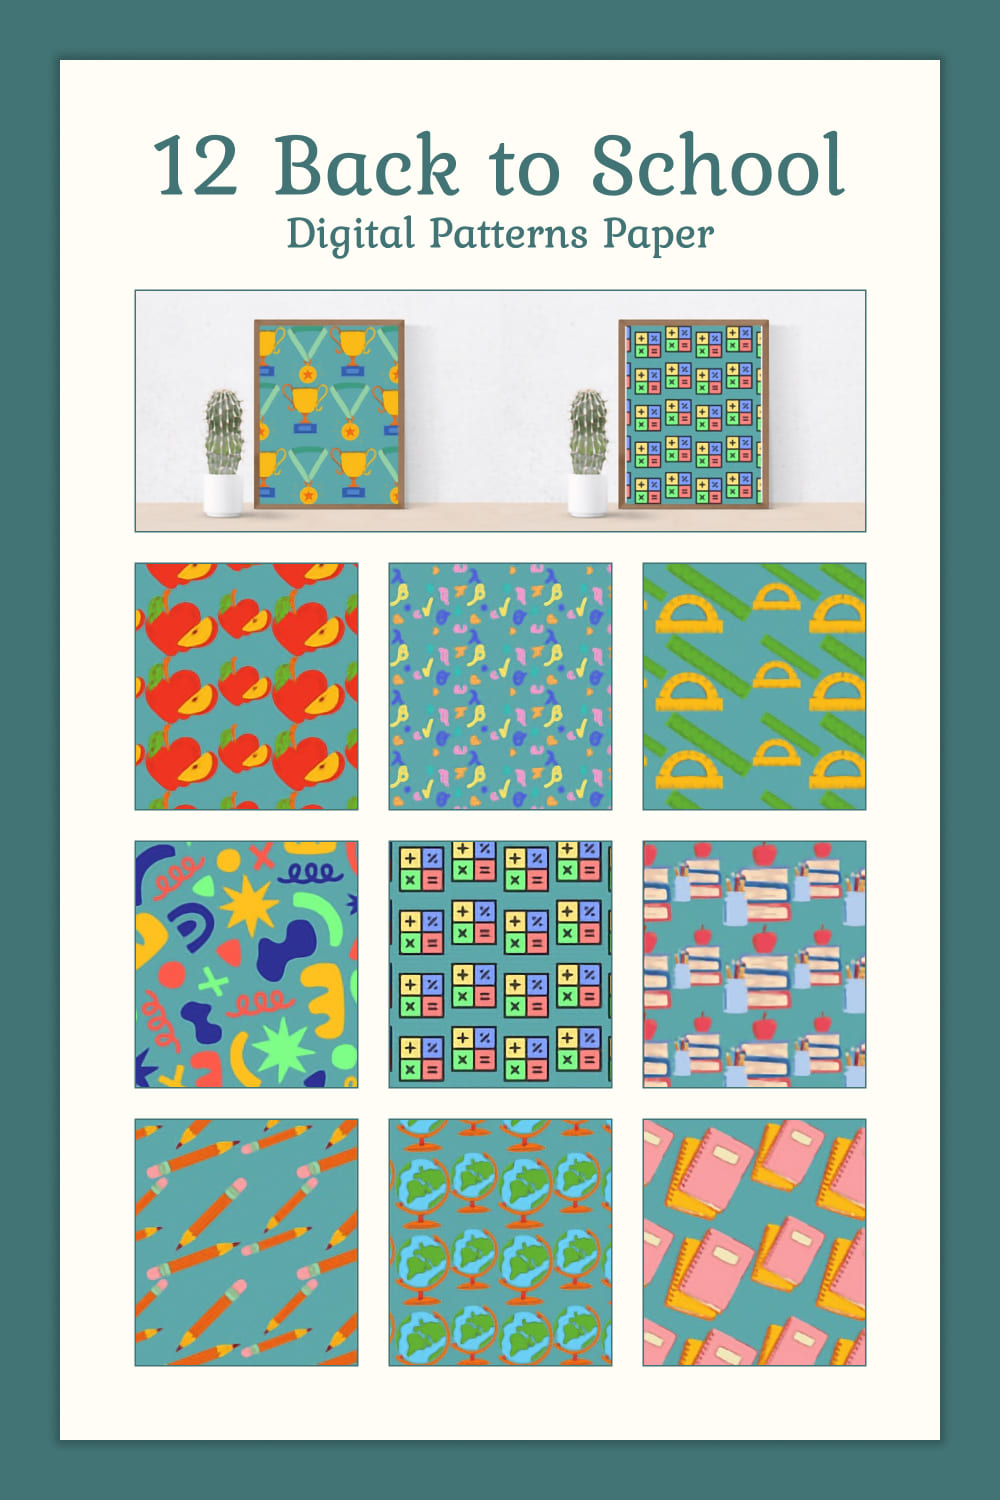 12 Back to School Digital Patterns Paper - Pinterest.